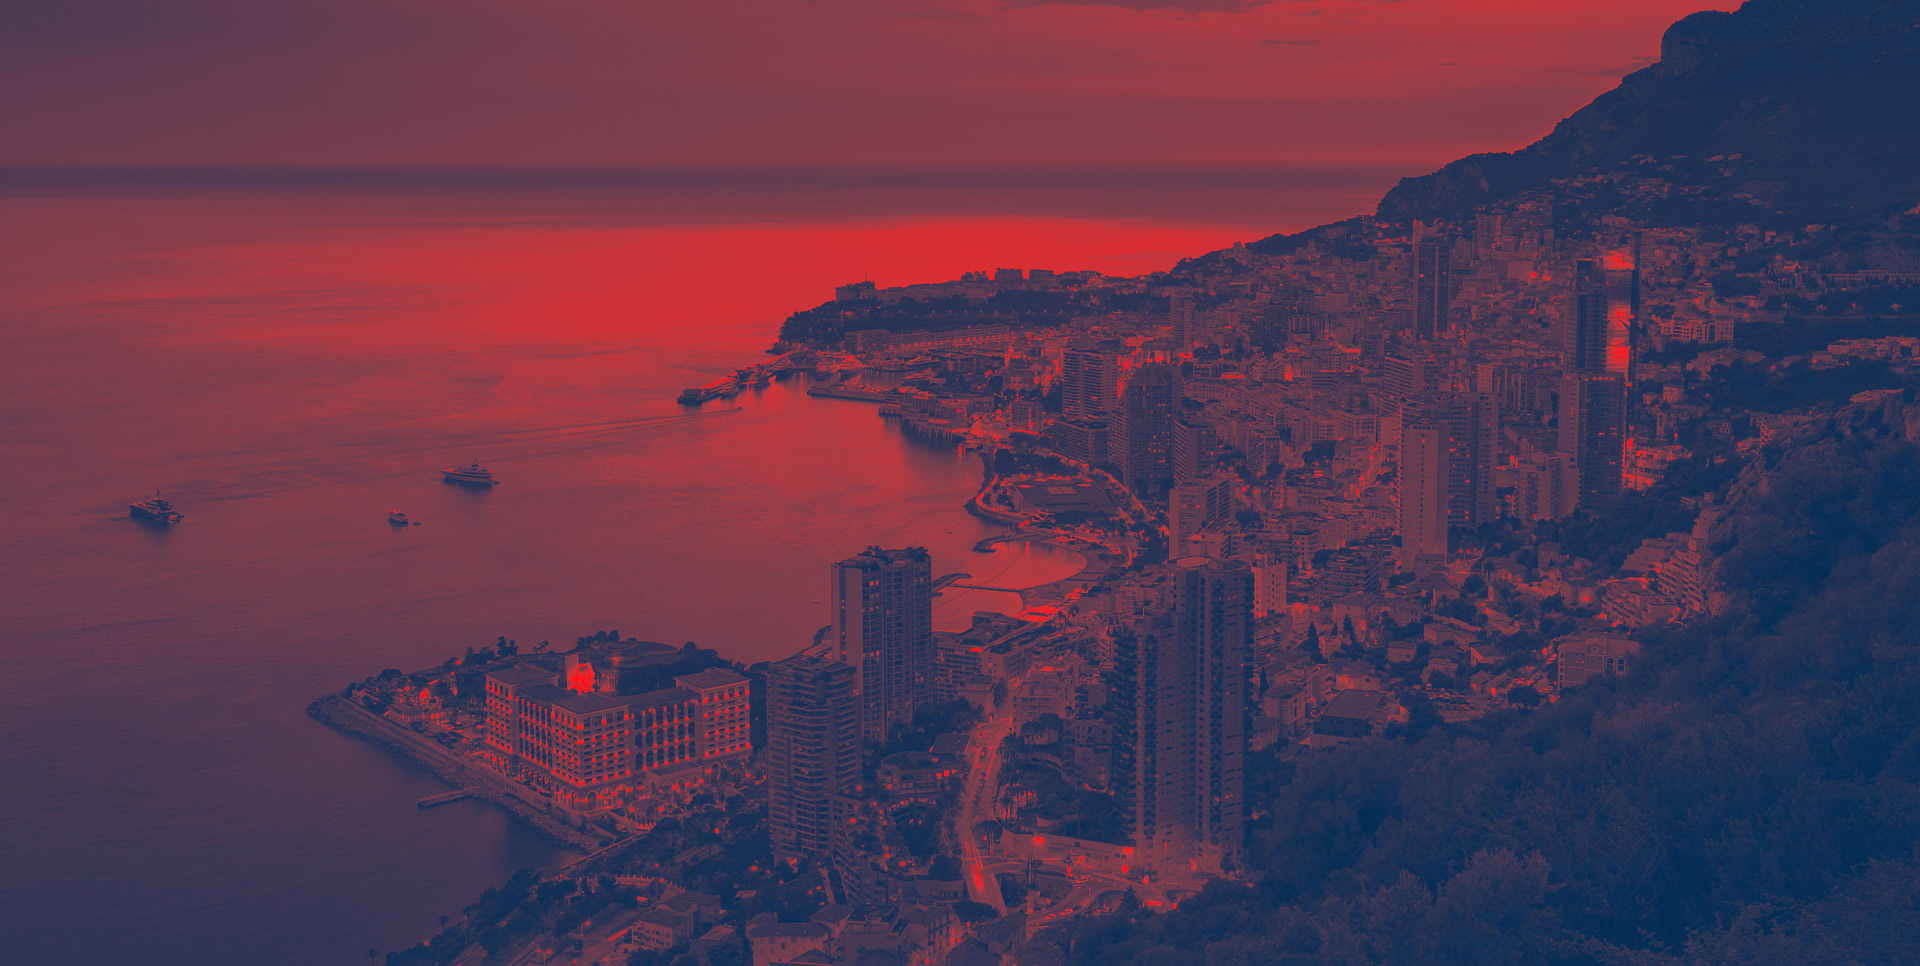 Monaco Increase Management